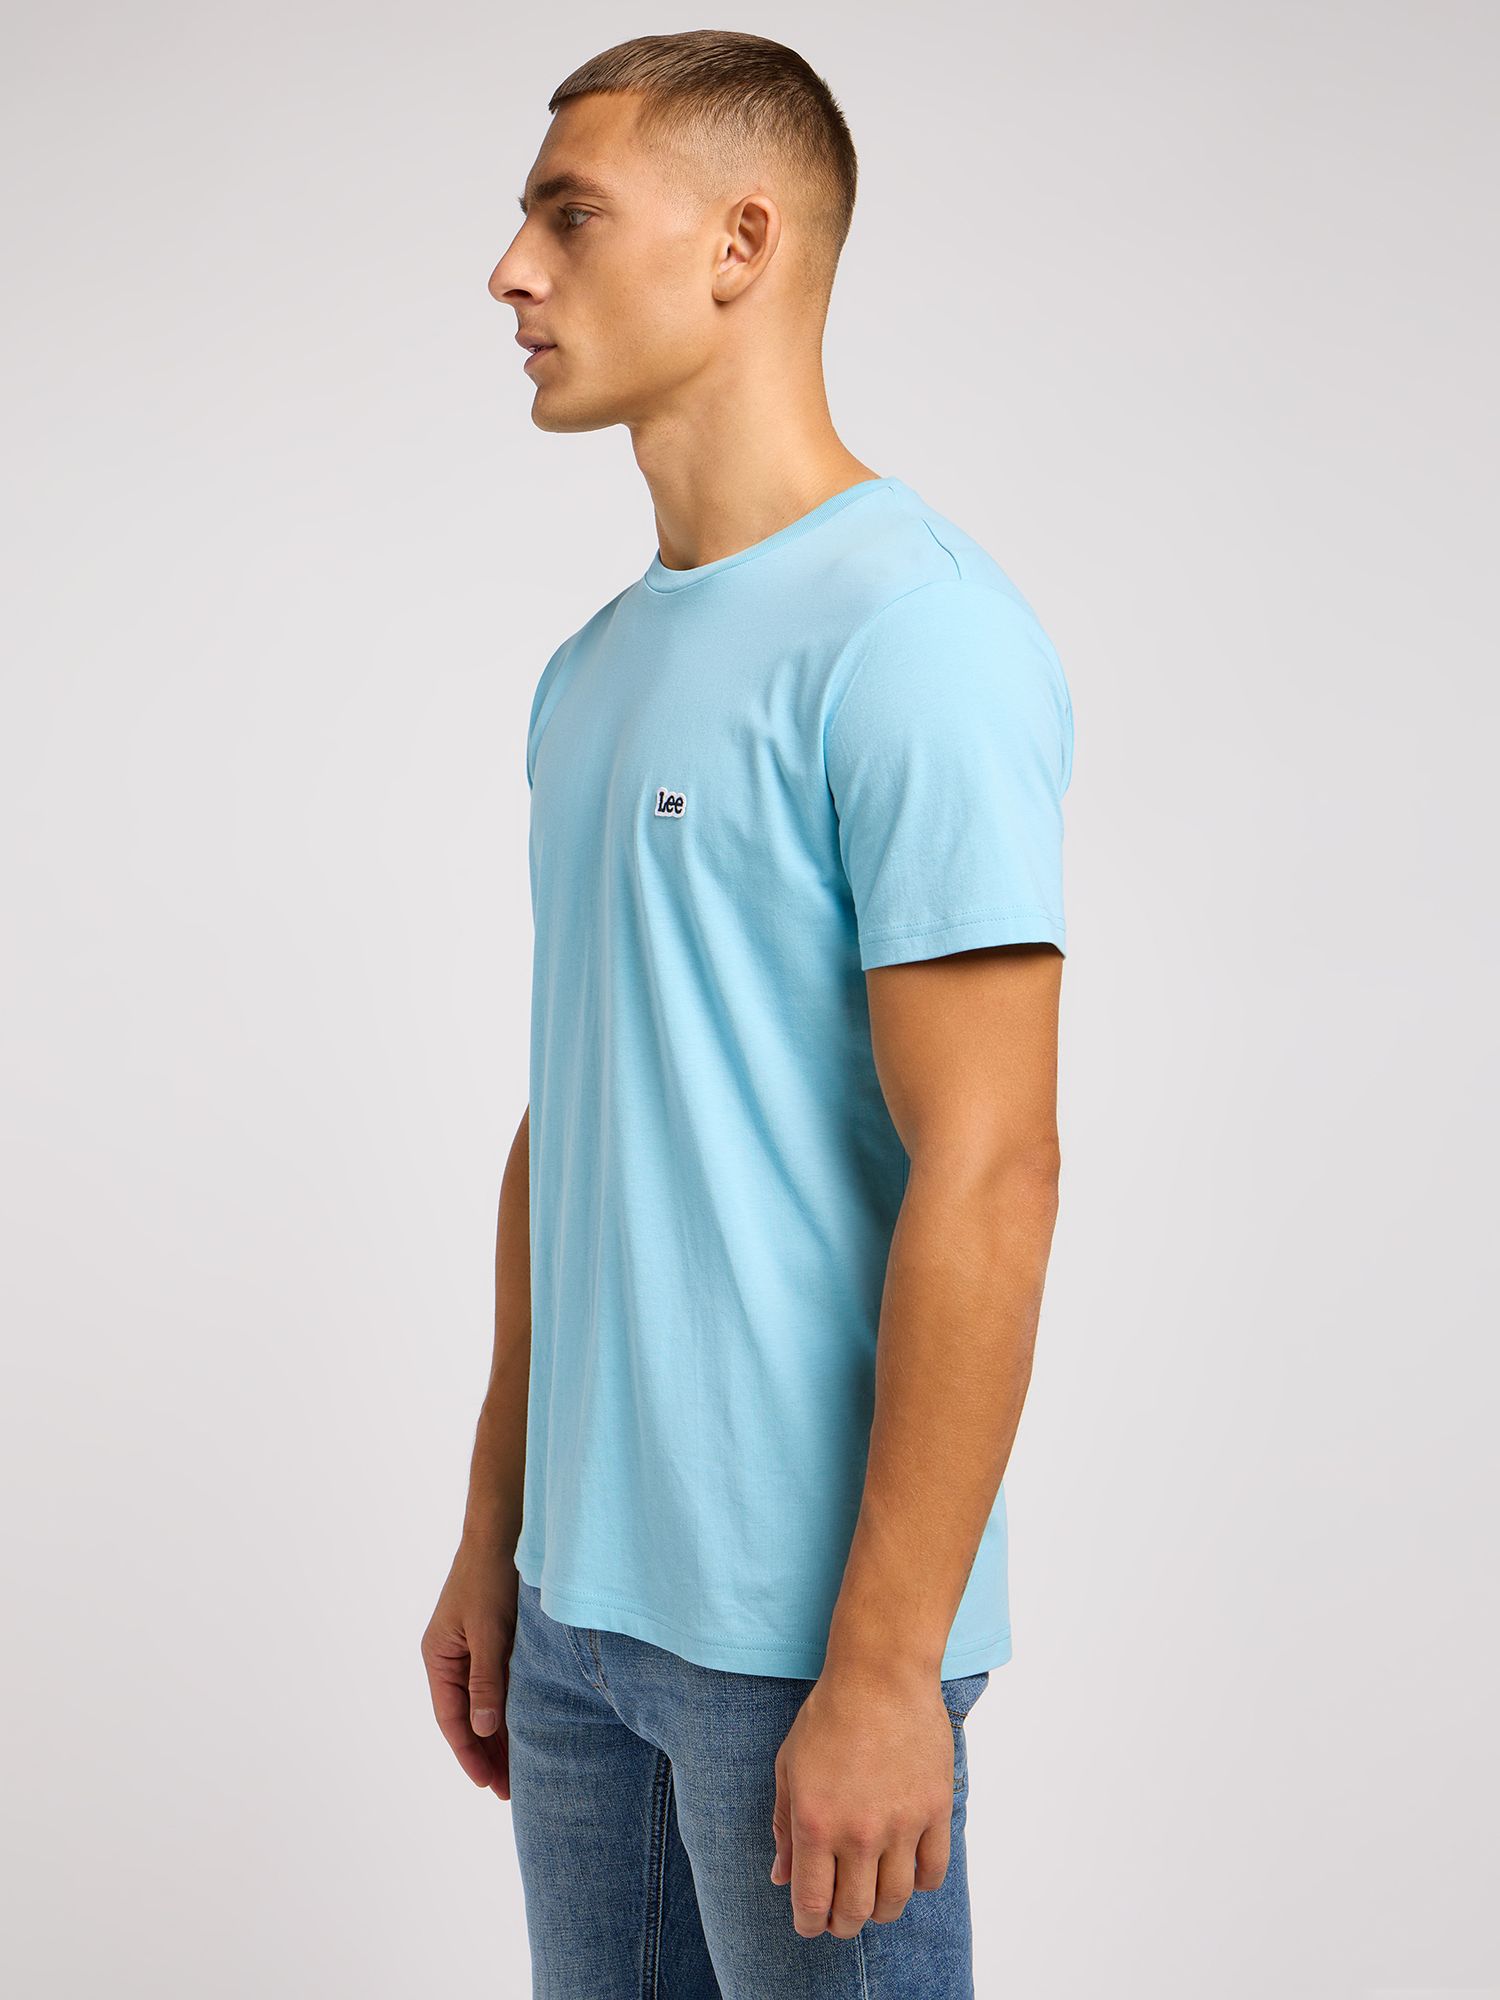 Lee Short Sleeve Patch Logo T-Shirt, Blue, S